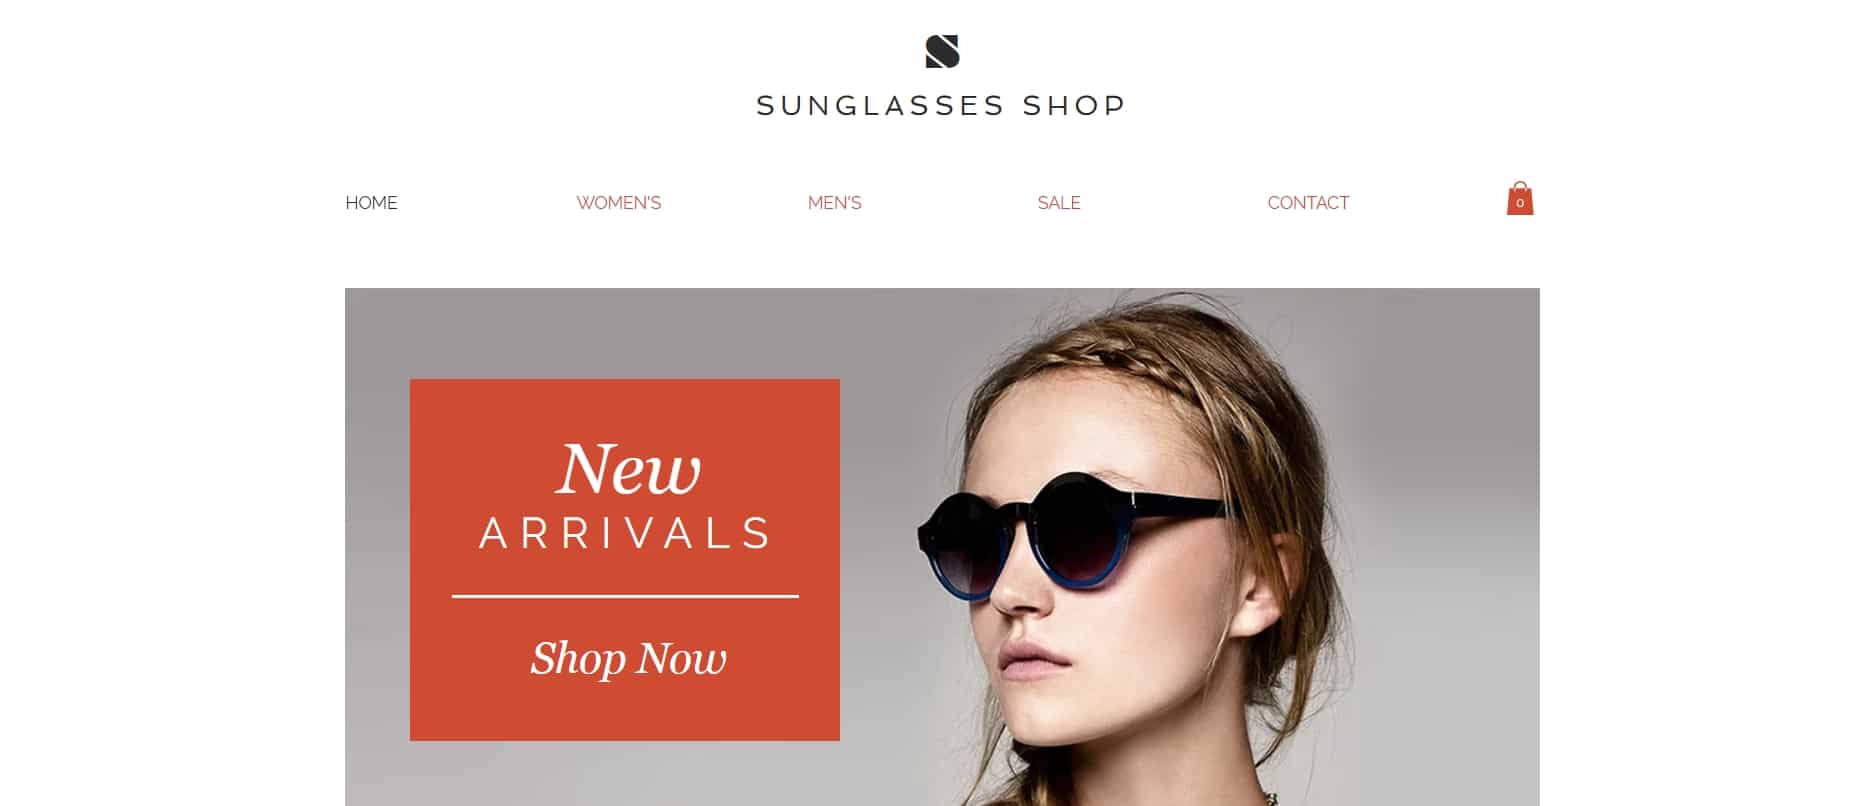 Sunglasses Shop Website